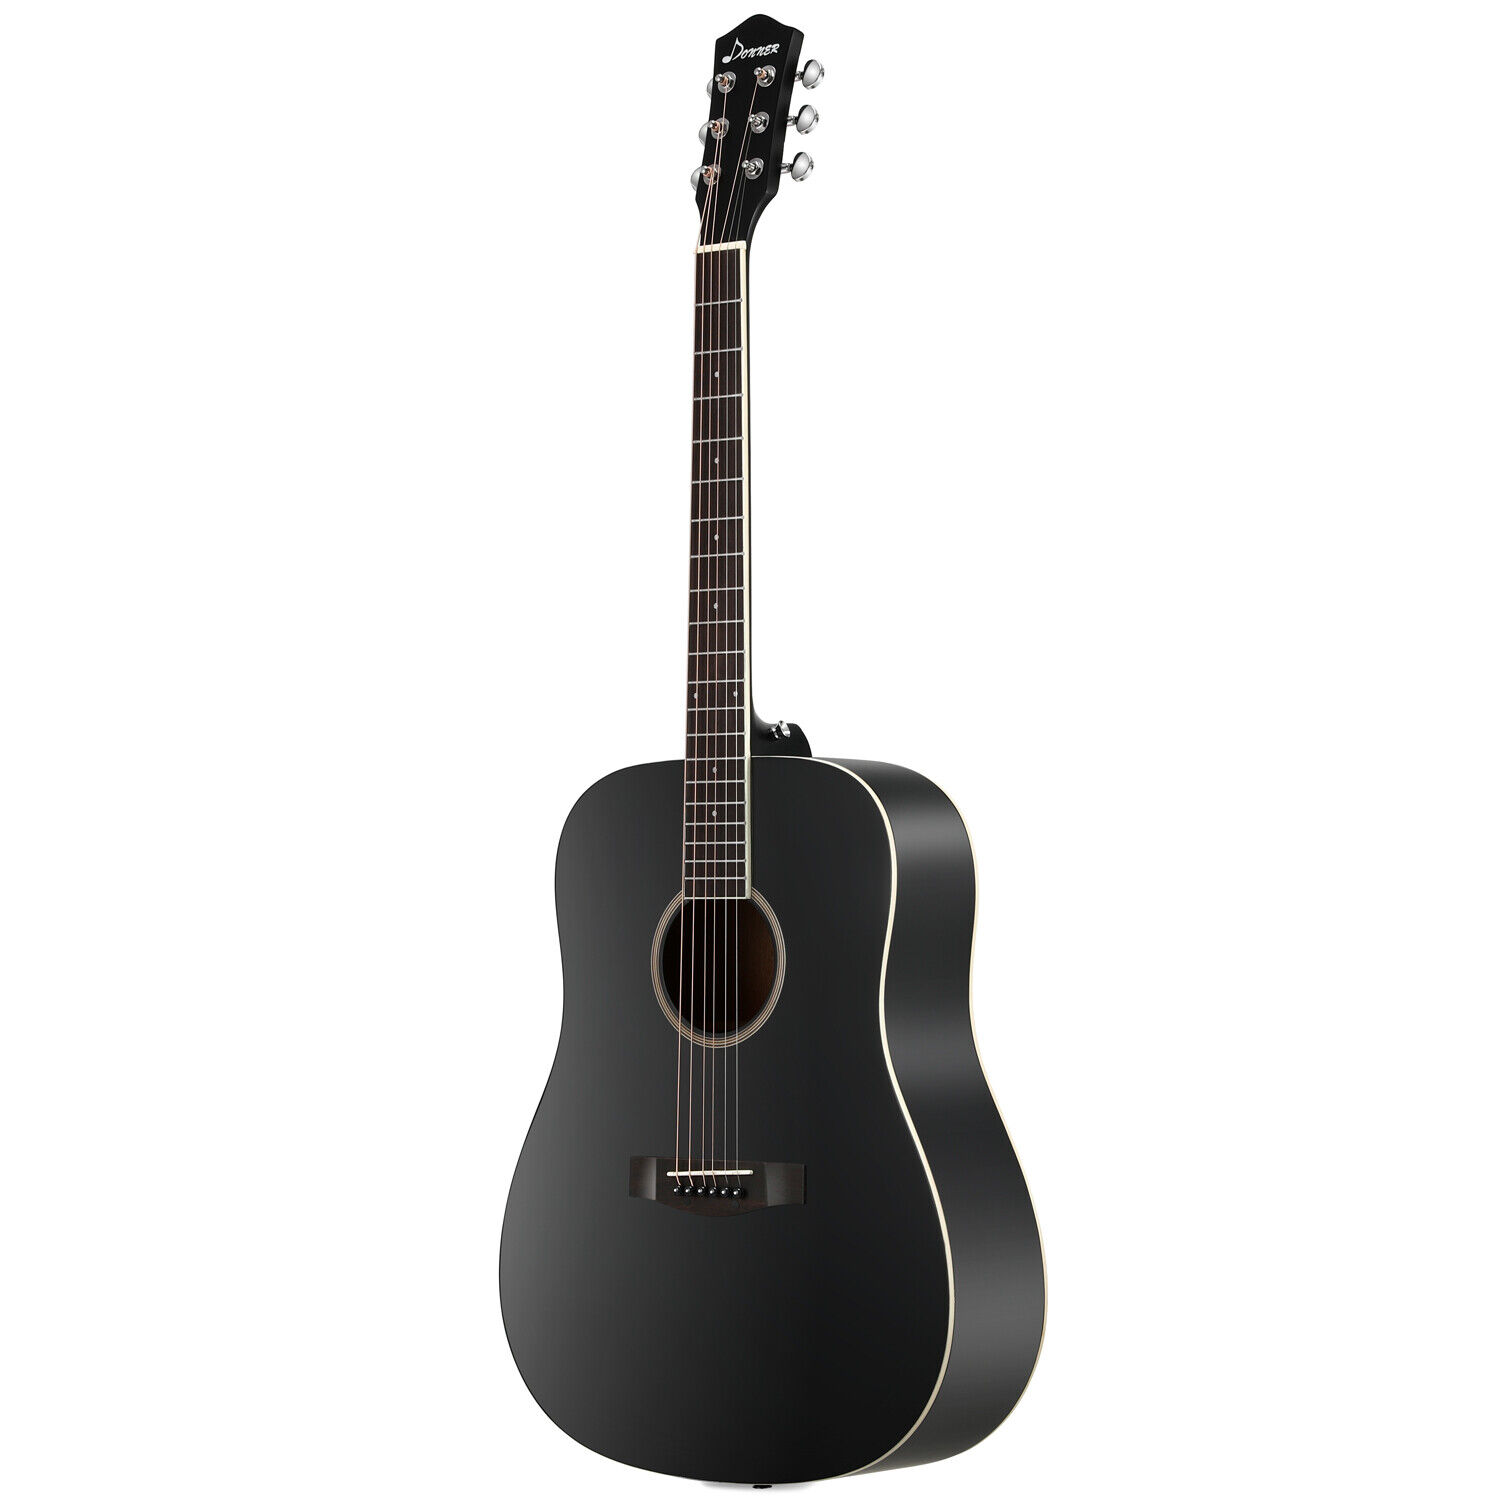 Donner DAG-1B Acoustic Guitar Full Size 41″ Cutaway Mahogany +Bag Strap | Refurb 9